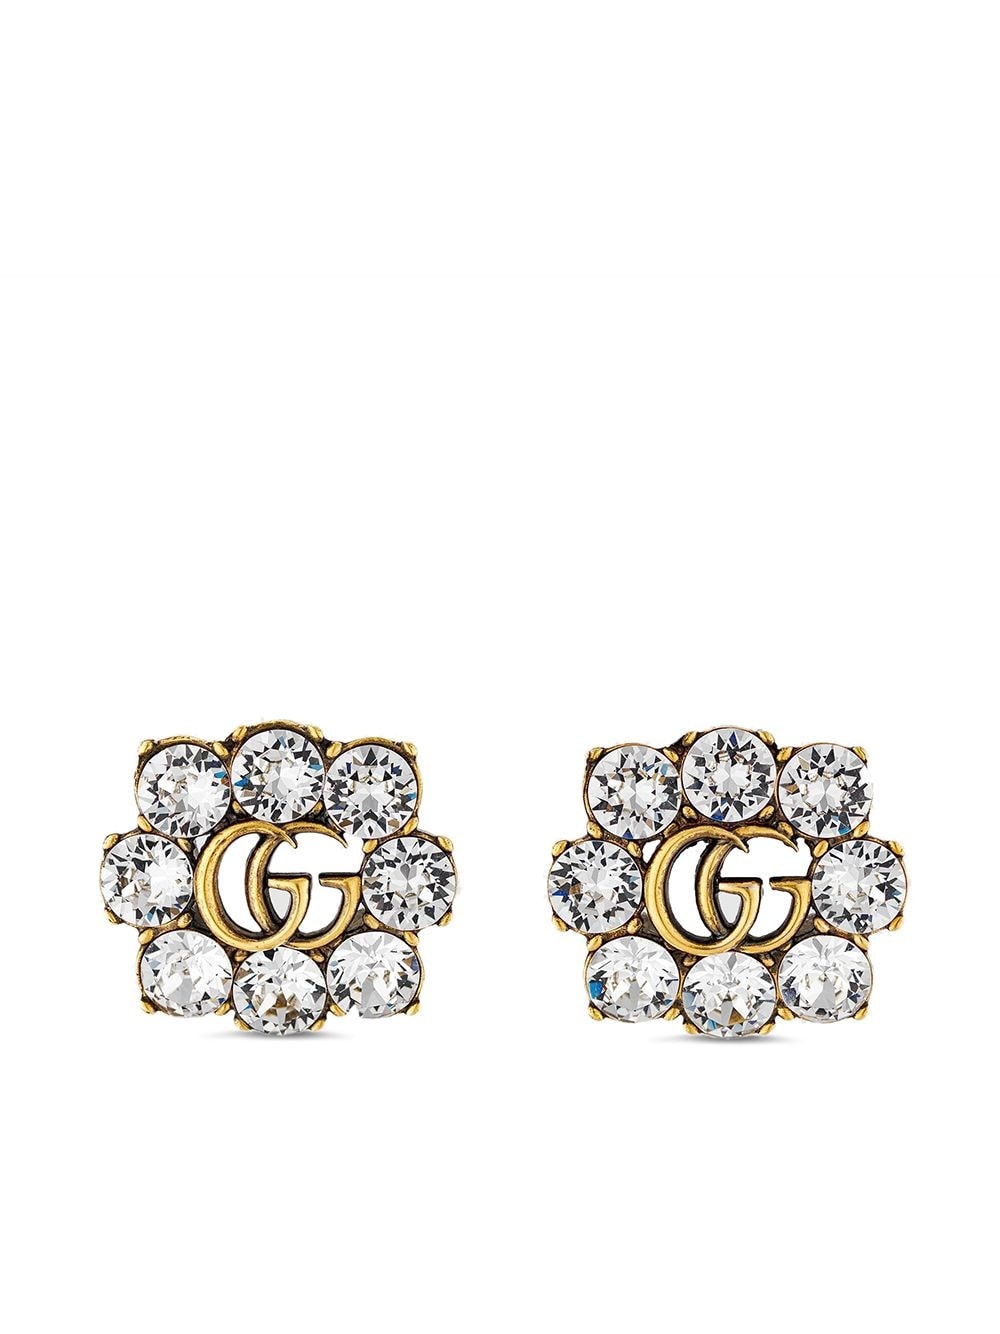 Double G crystal earrings - 1